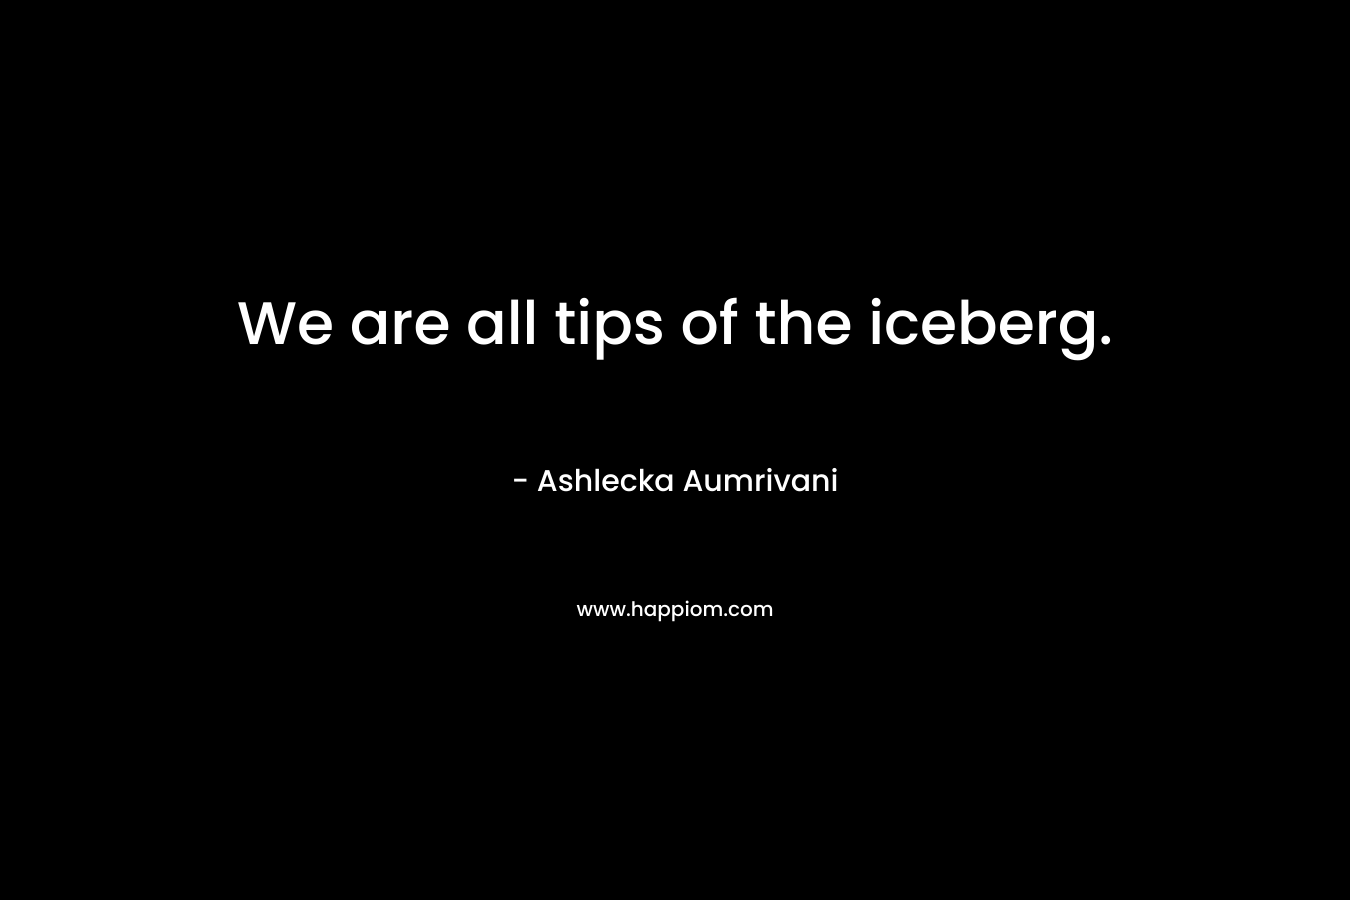 We are all tips of the iceberg. – Ashlecka Aumrivani